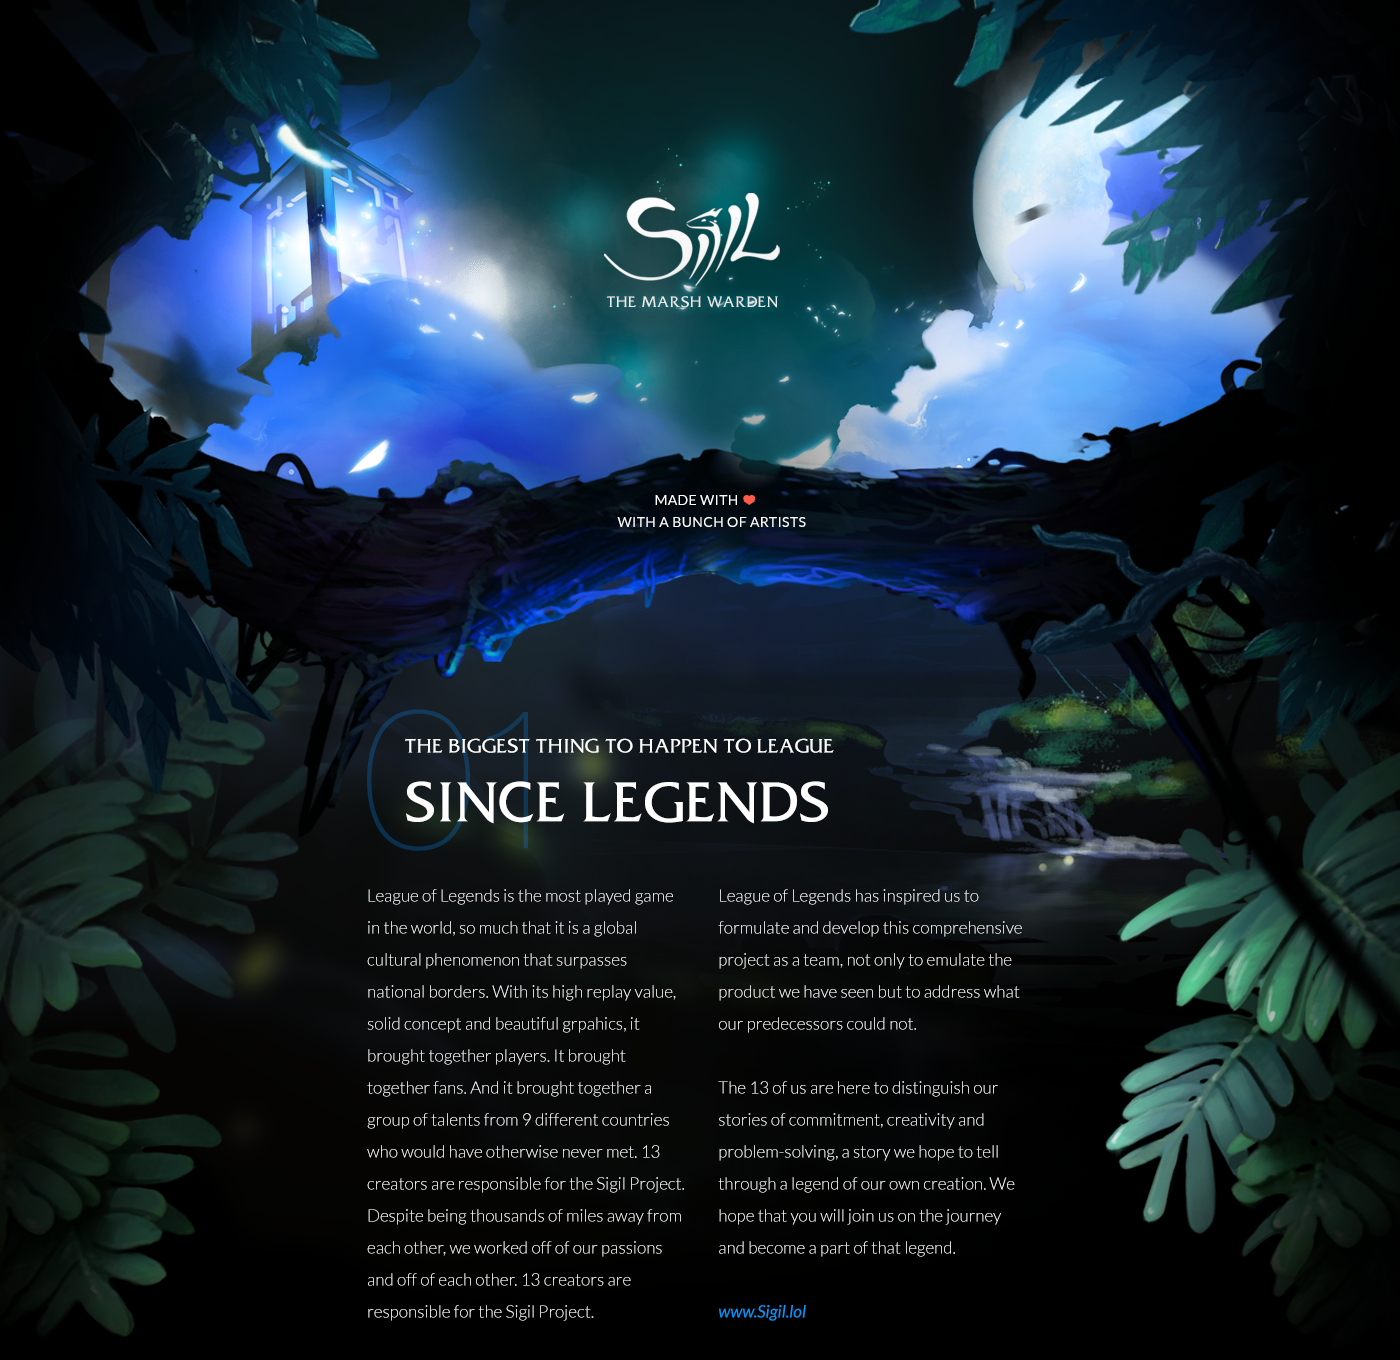 sigil champion league of legends Character concept fireflies frog lizzard interactive 3D environment teaser video DOTA RIOT GAMES